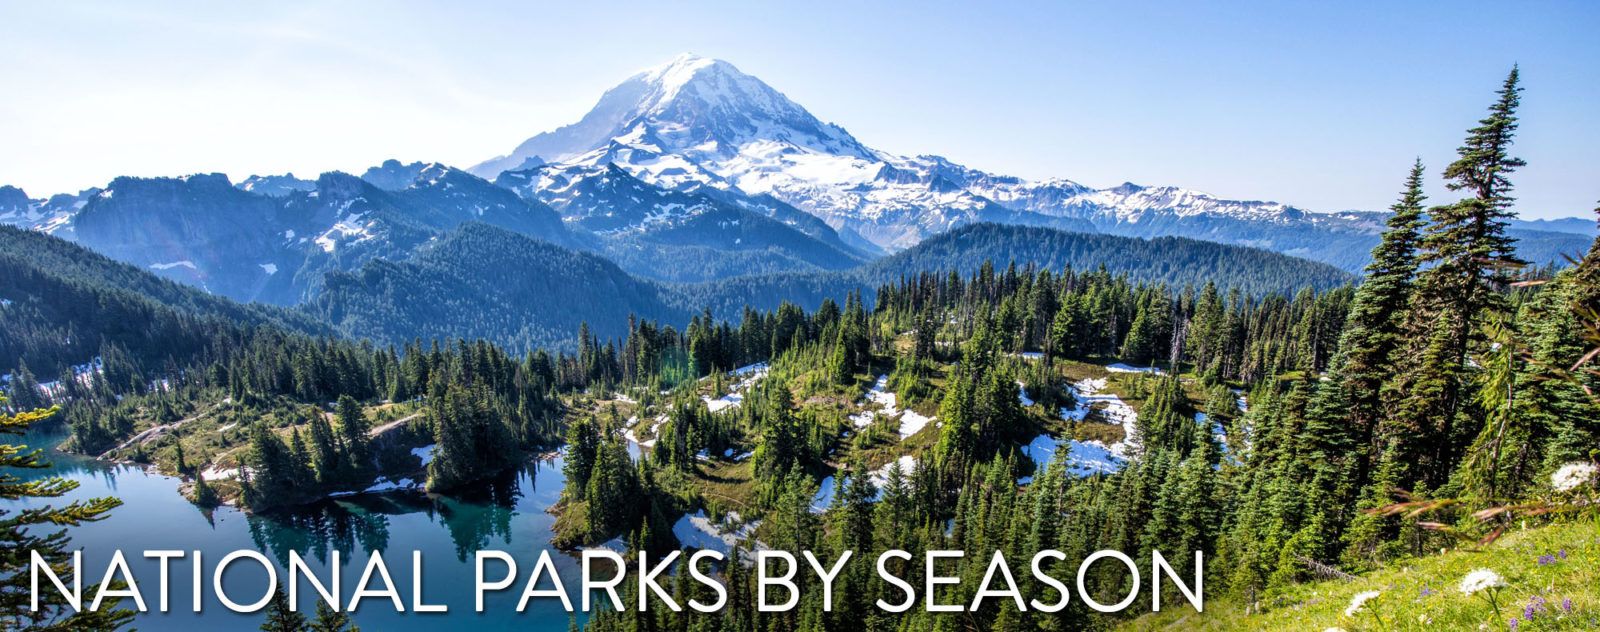 National Park Seasons Photo